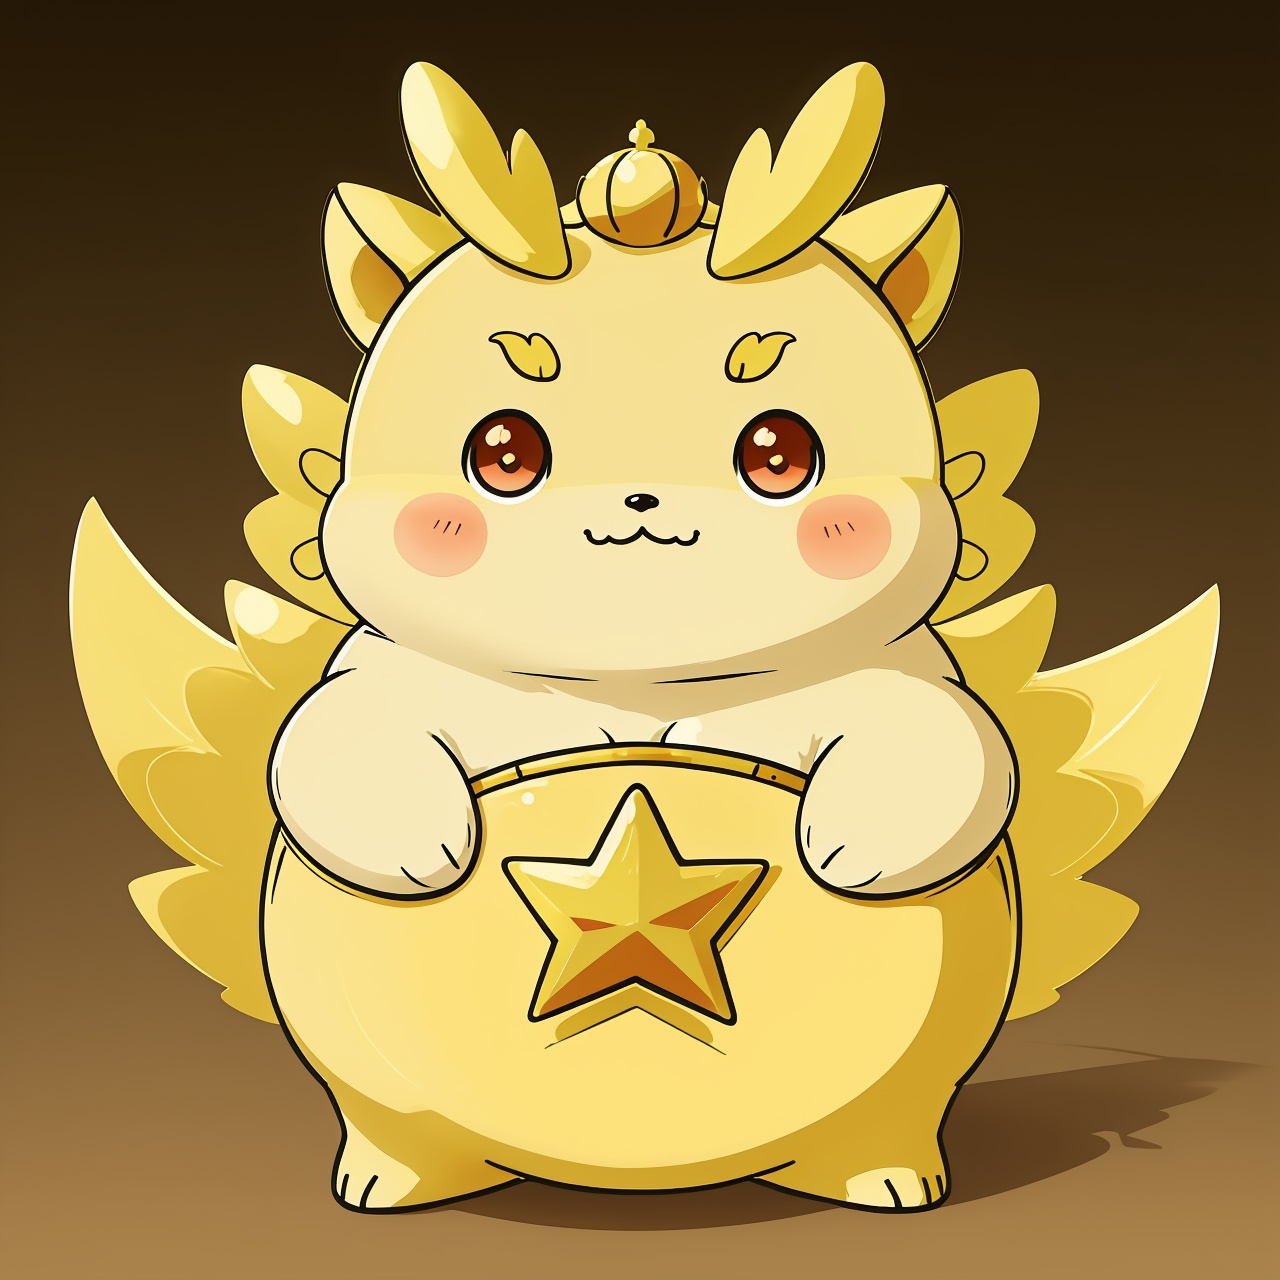 Yellow Pokemon, cute, chubby, pentagram, gold ingot, 32k, high definition